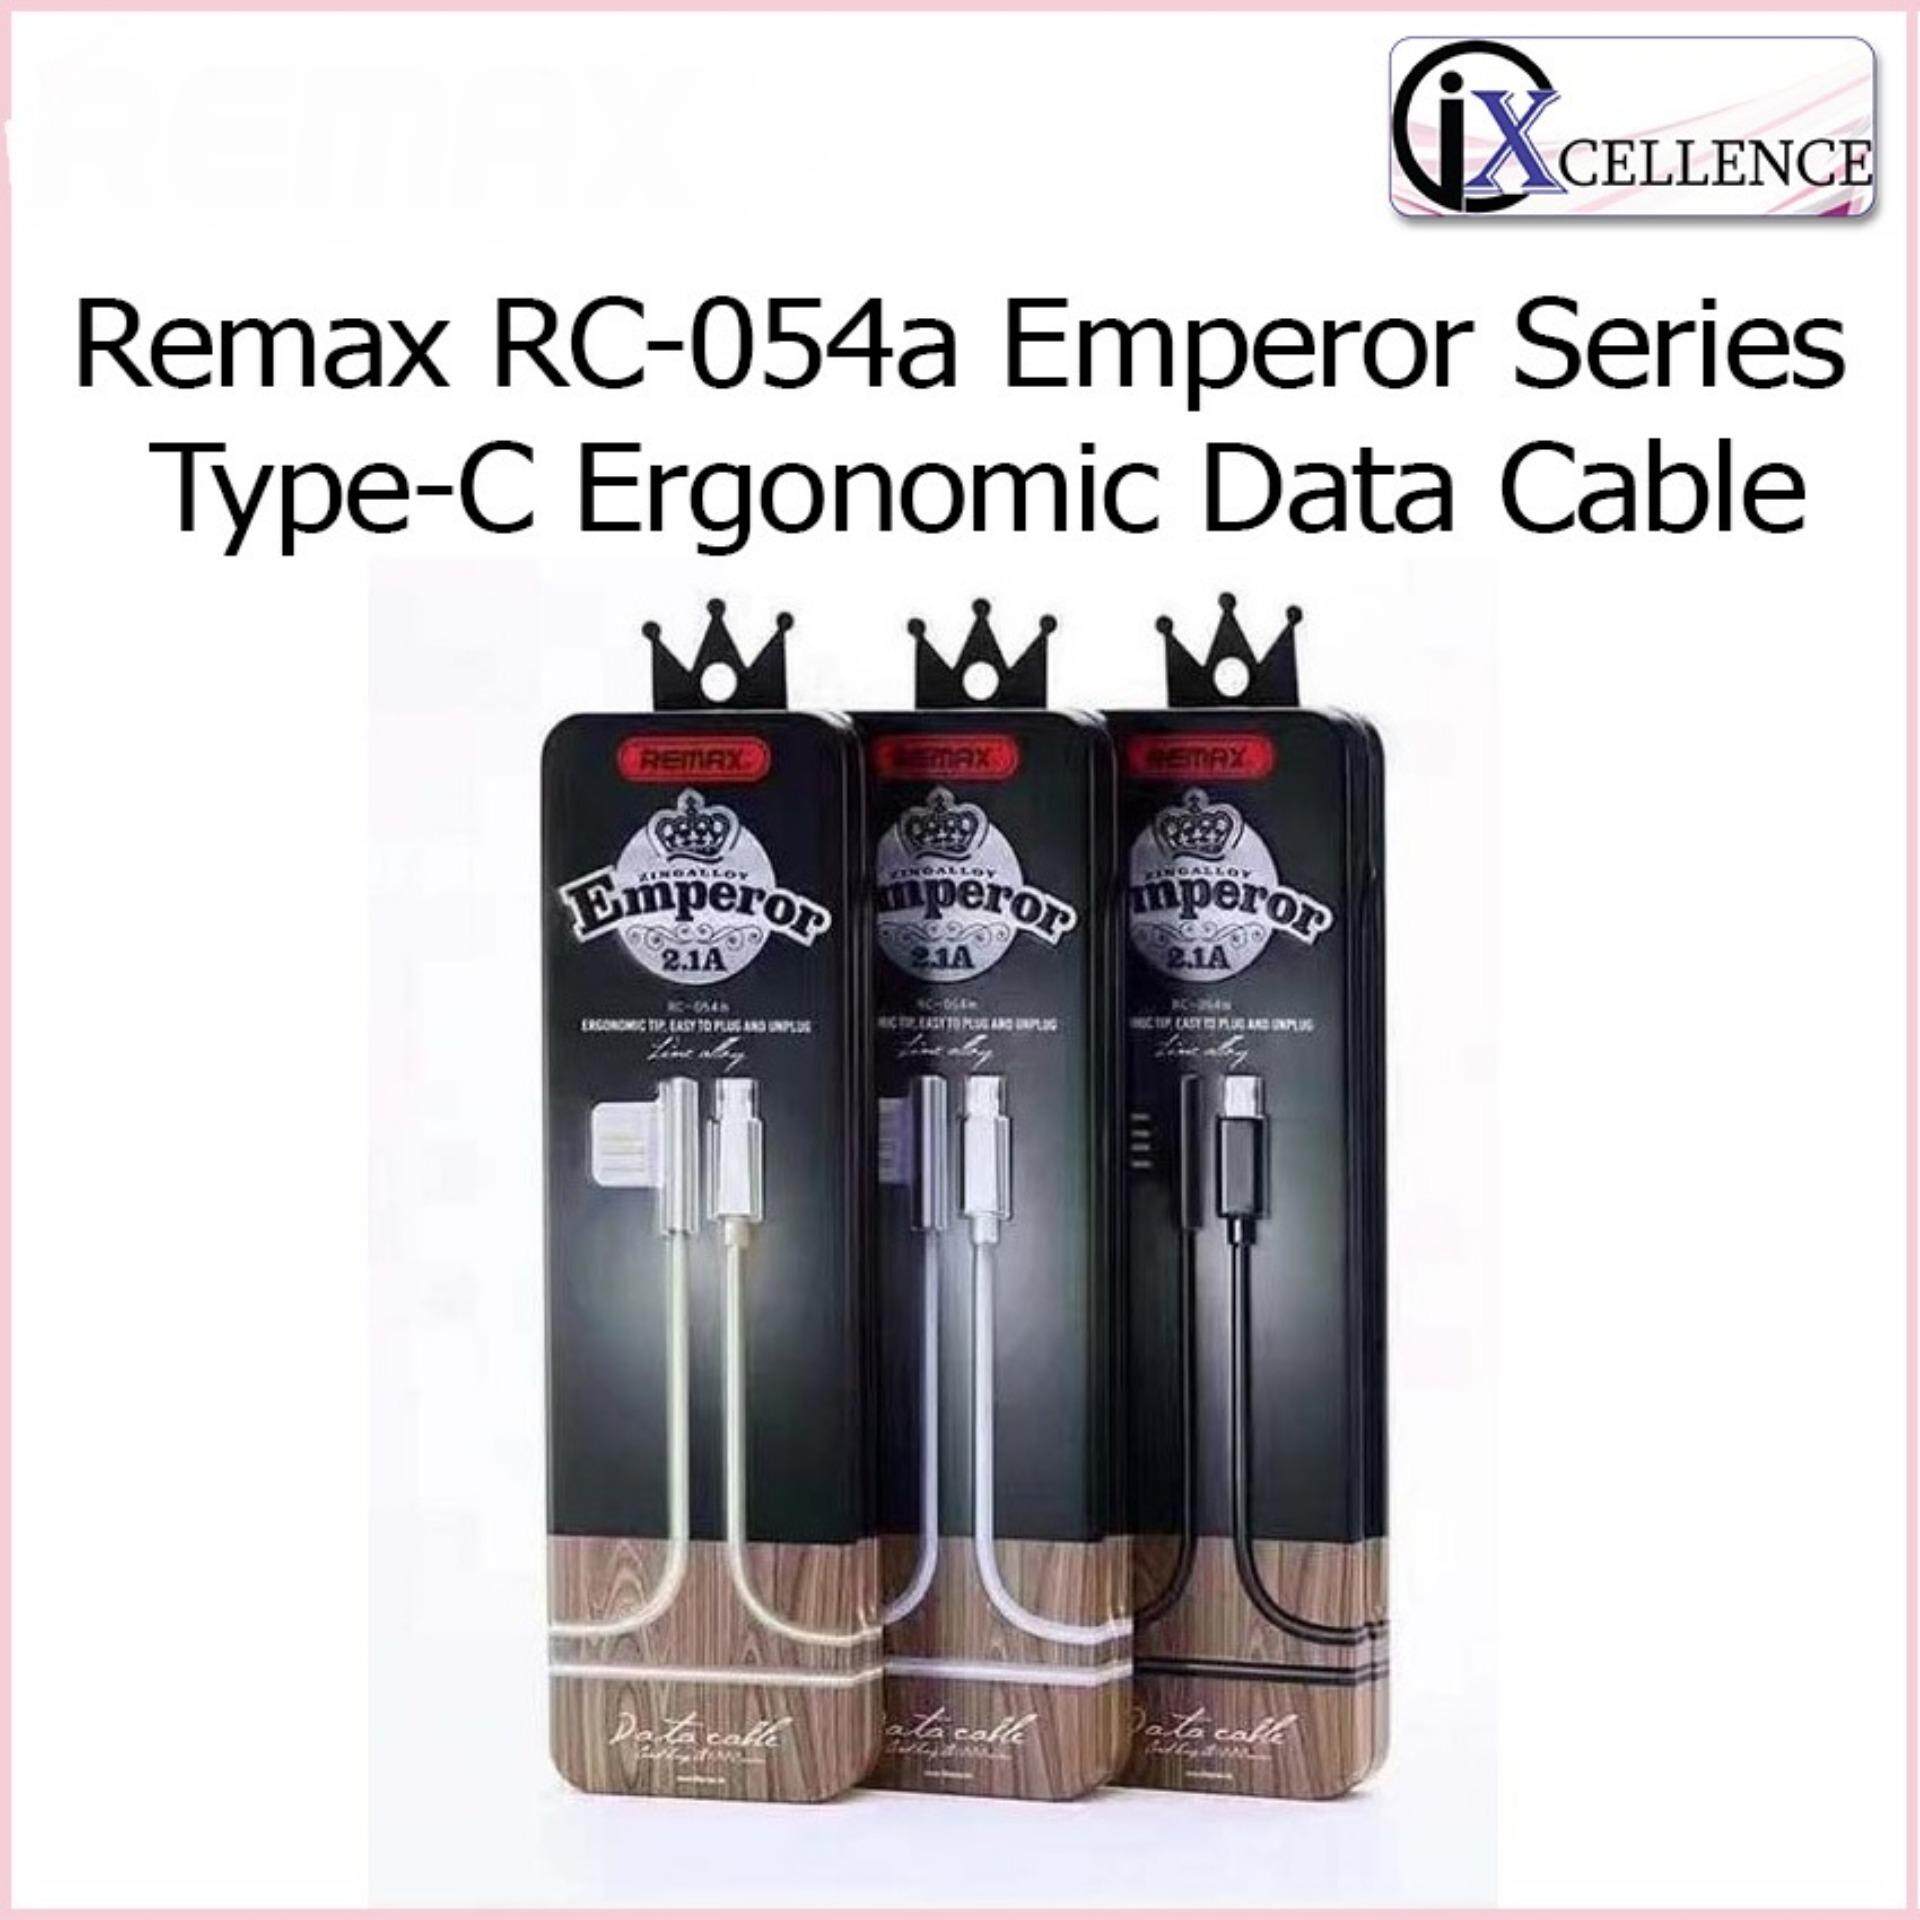 [IX] Remax RC-054a Emperor series Type-C Ergonomic Data Cable